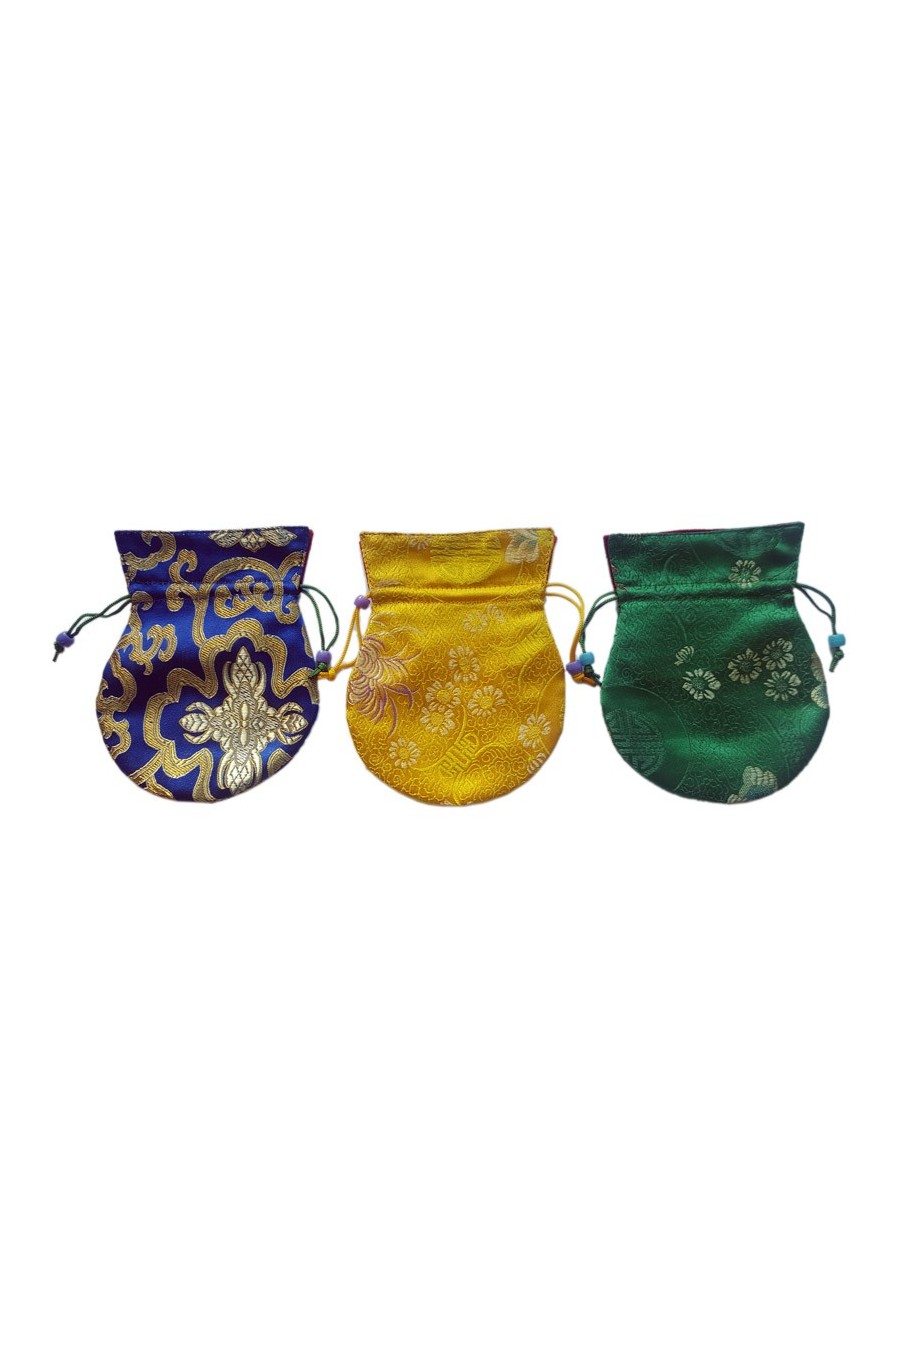 Decorated Tibetan bags